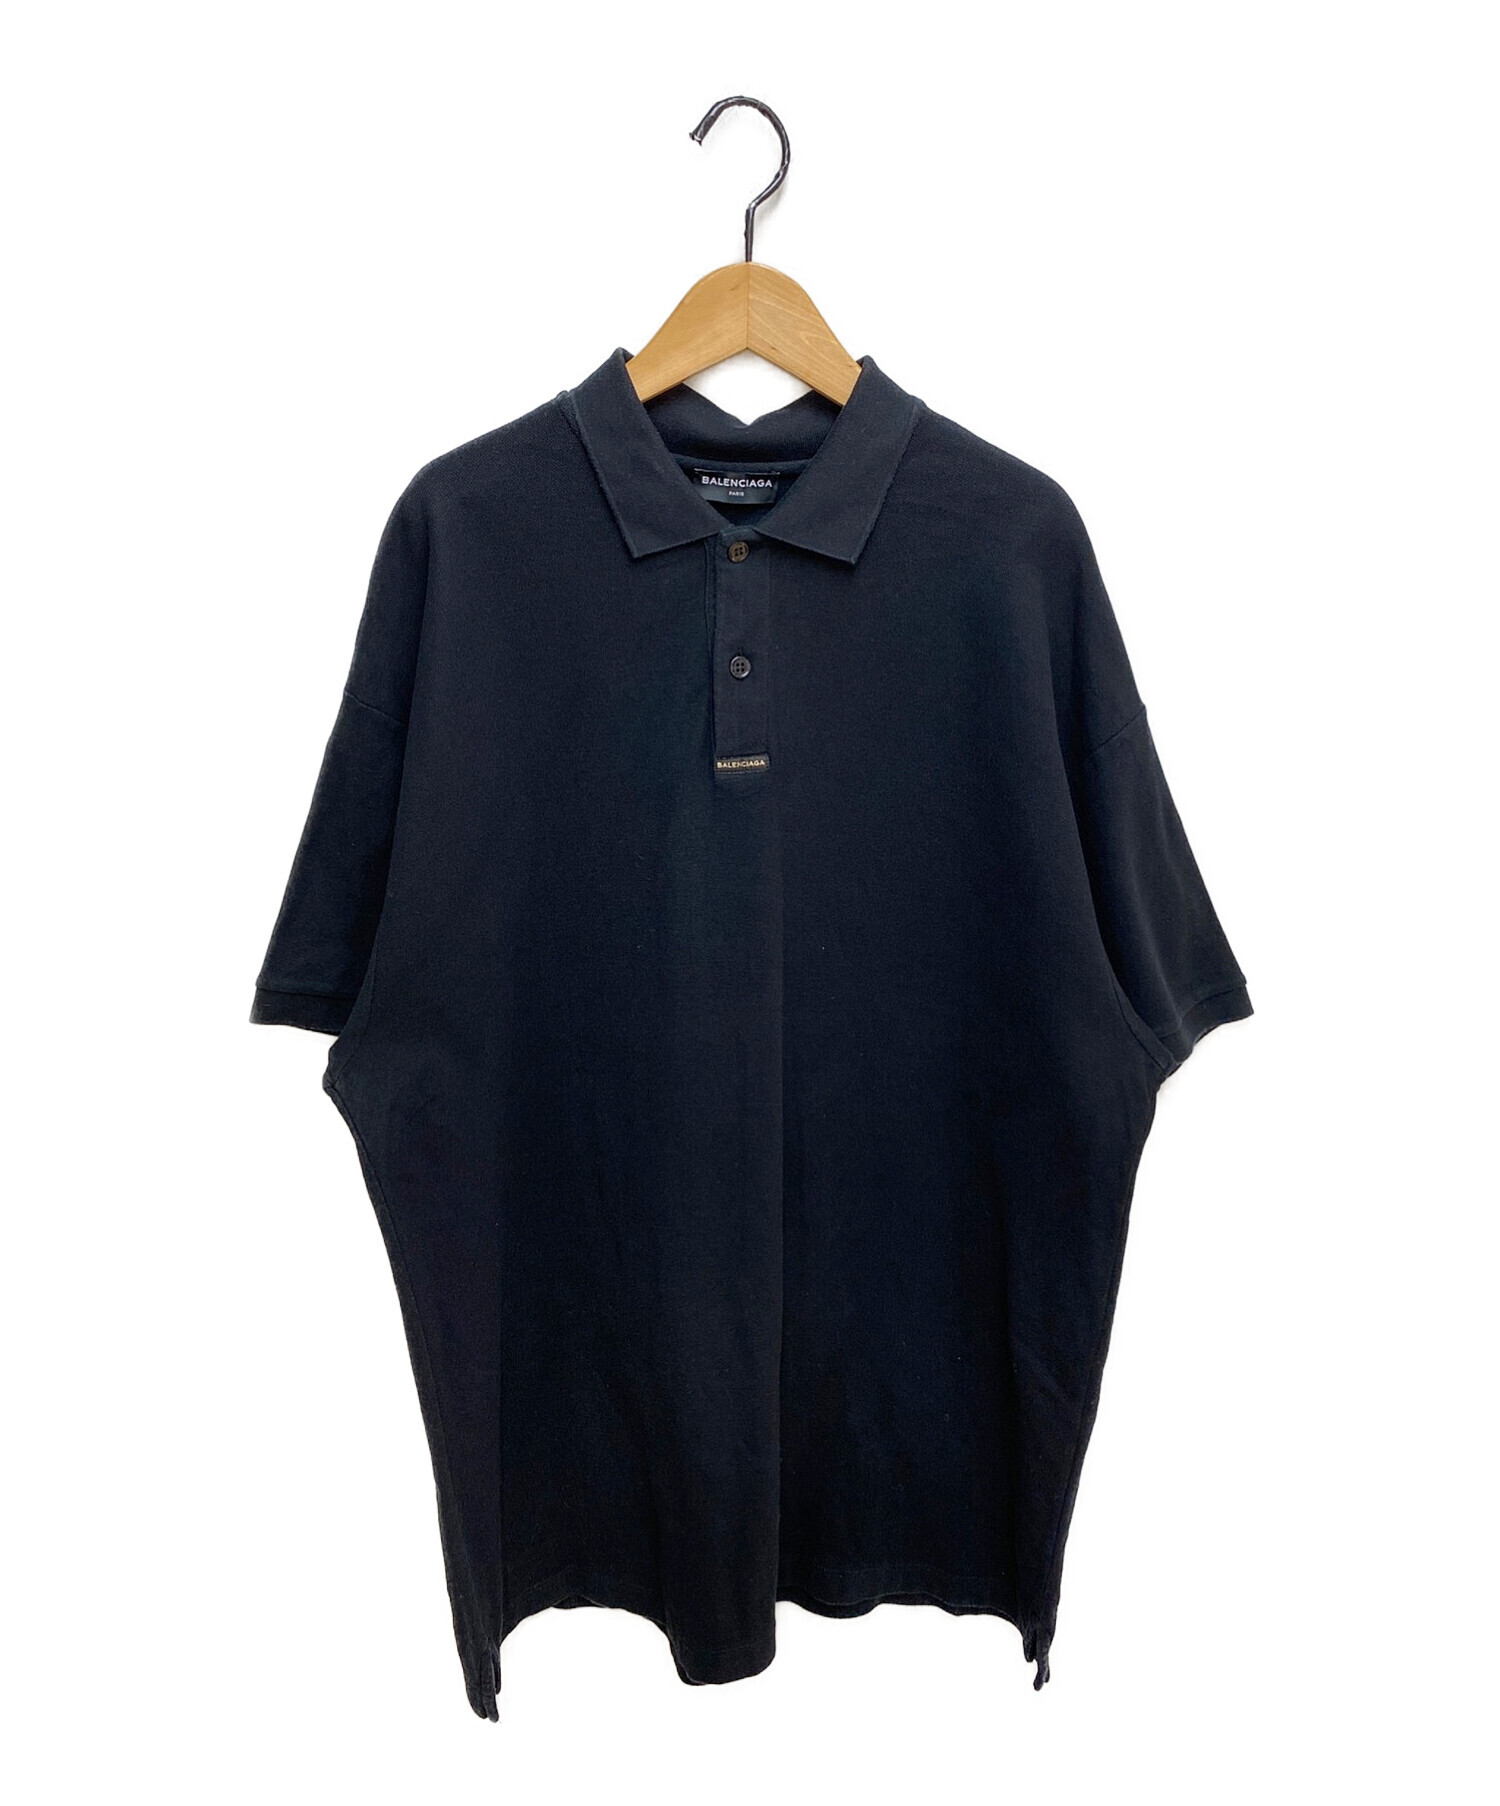 BALENCIAGA (バレンシアガ) オーバーサイズポロシャツ ブラック サイズ:M